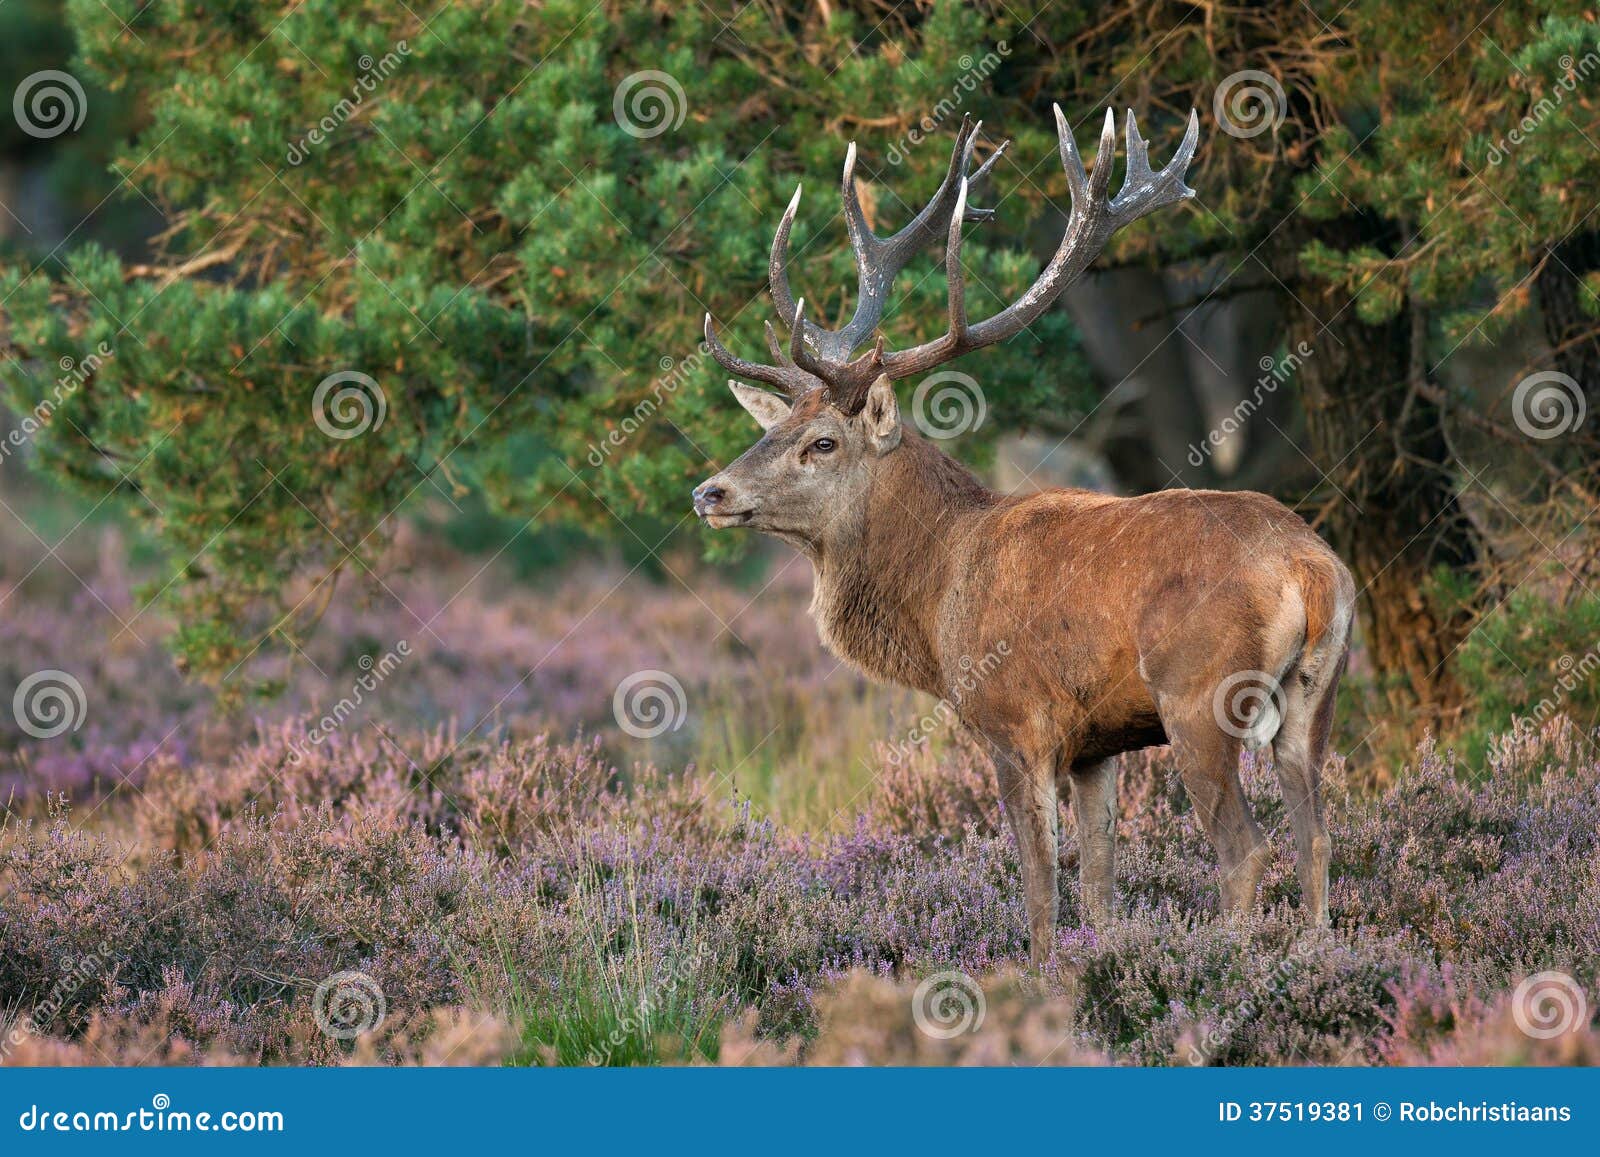 red deer (cervus elaphus).